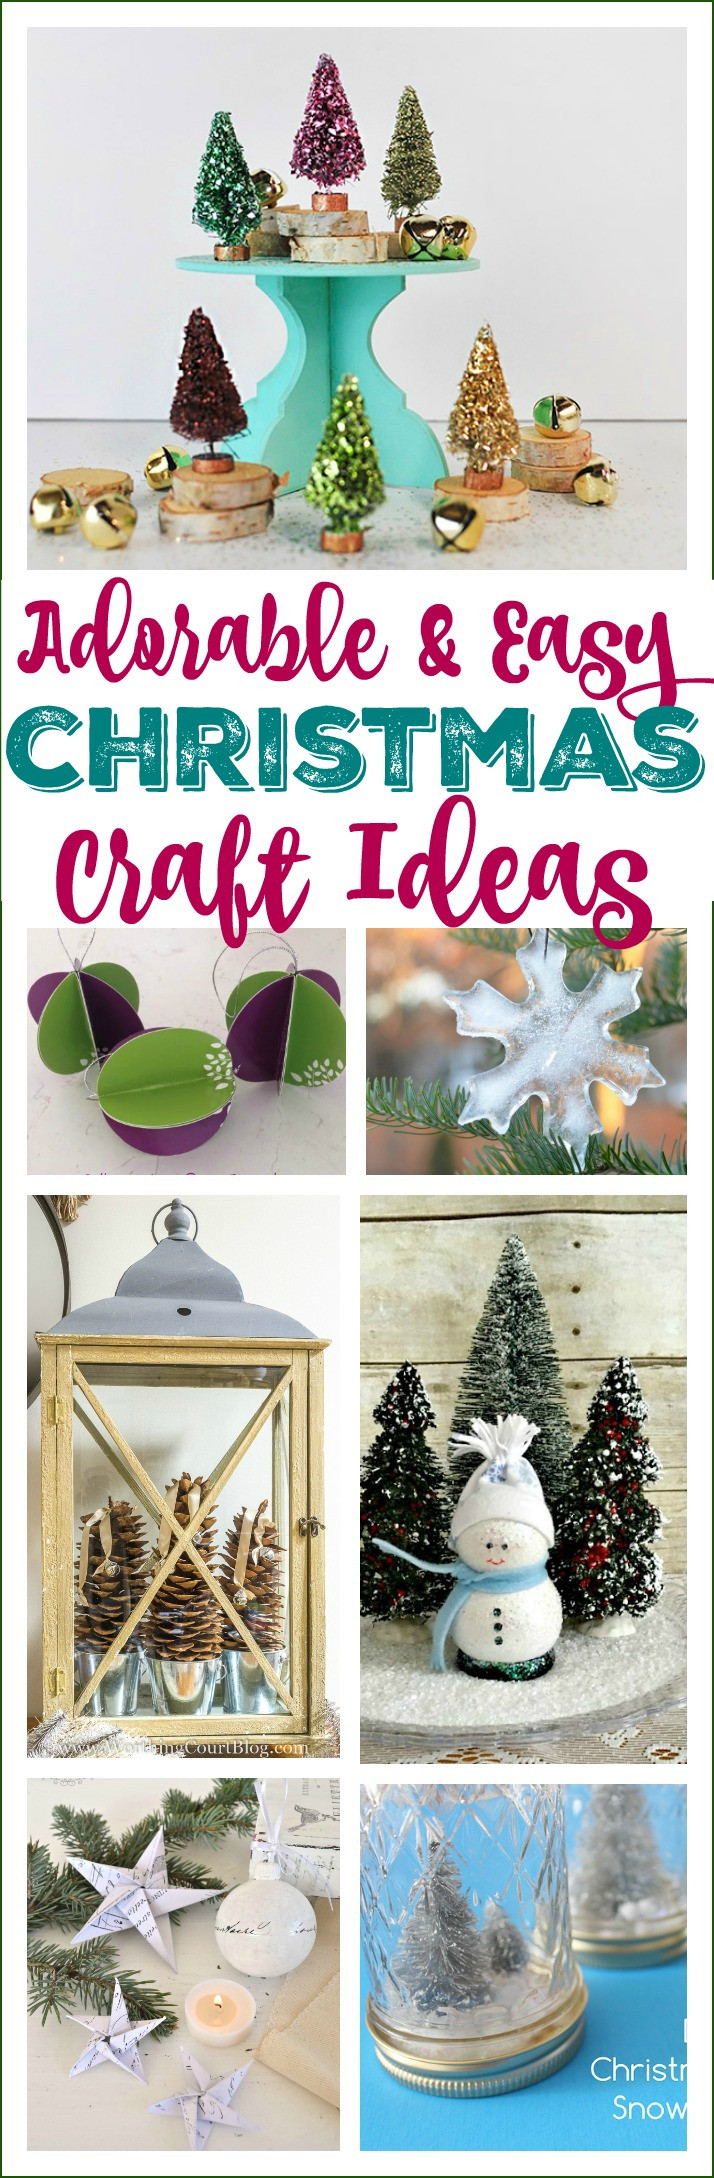 Easy Christmas Craft Ideas
 Adorable & Easy Christmas Craft Ideas Work it Wednesday